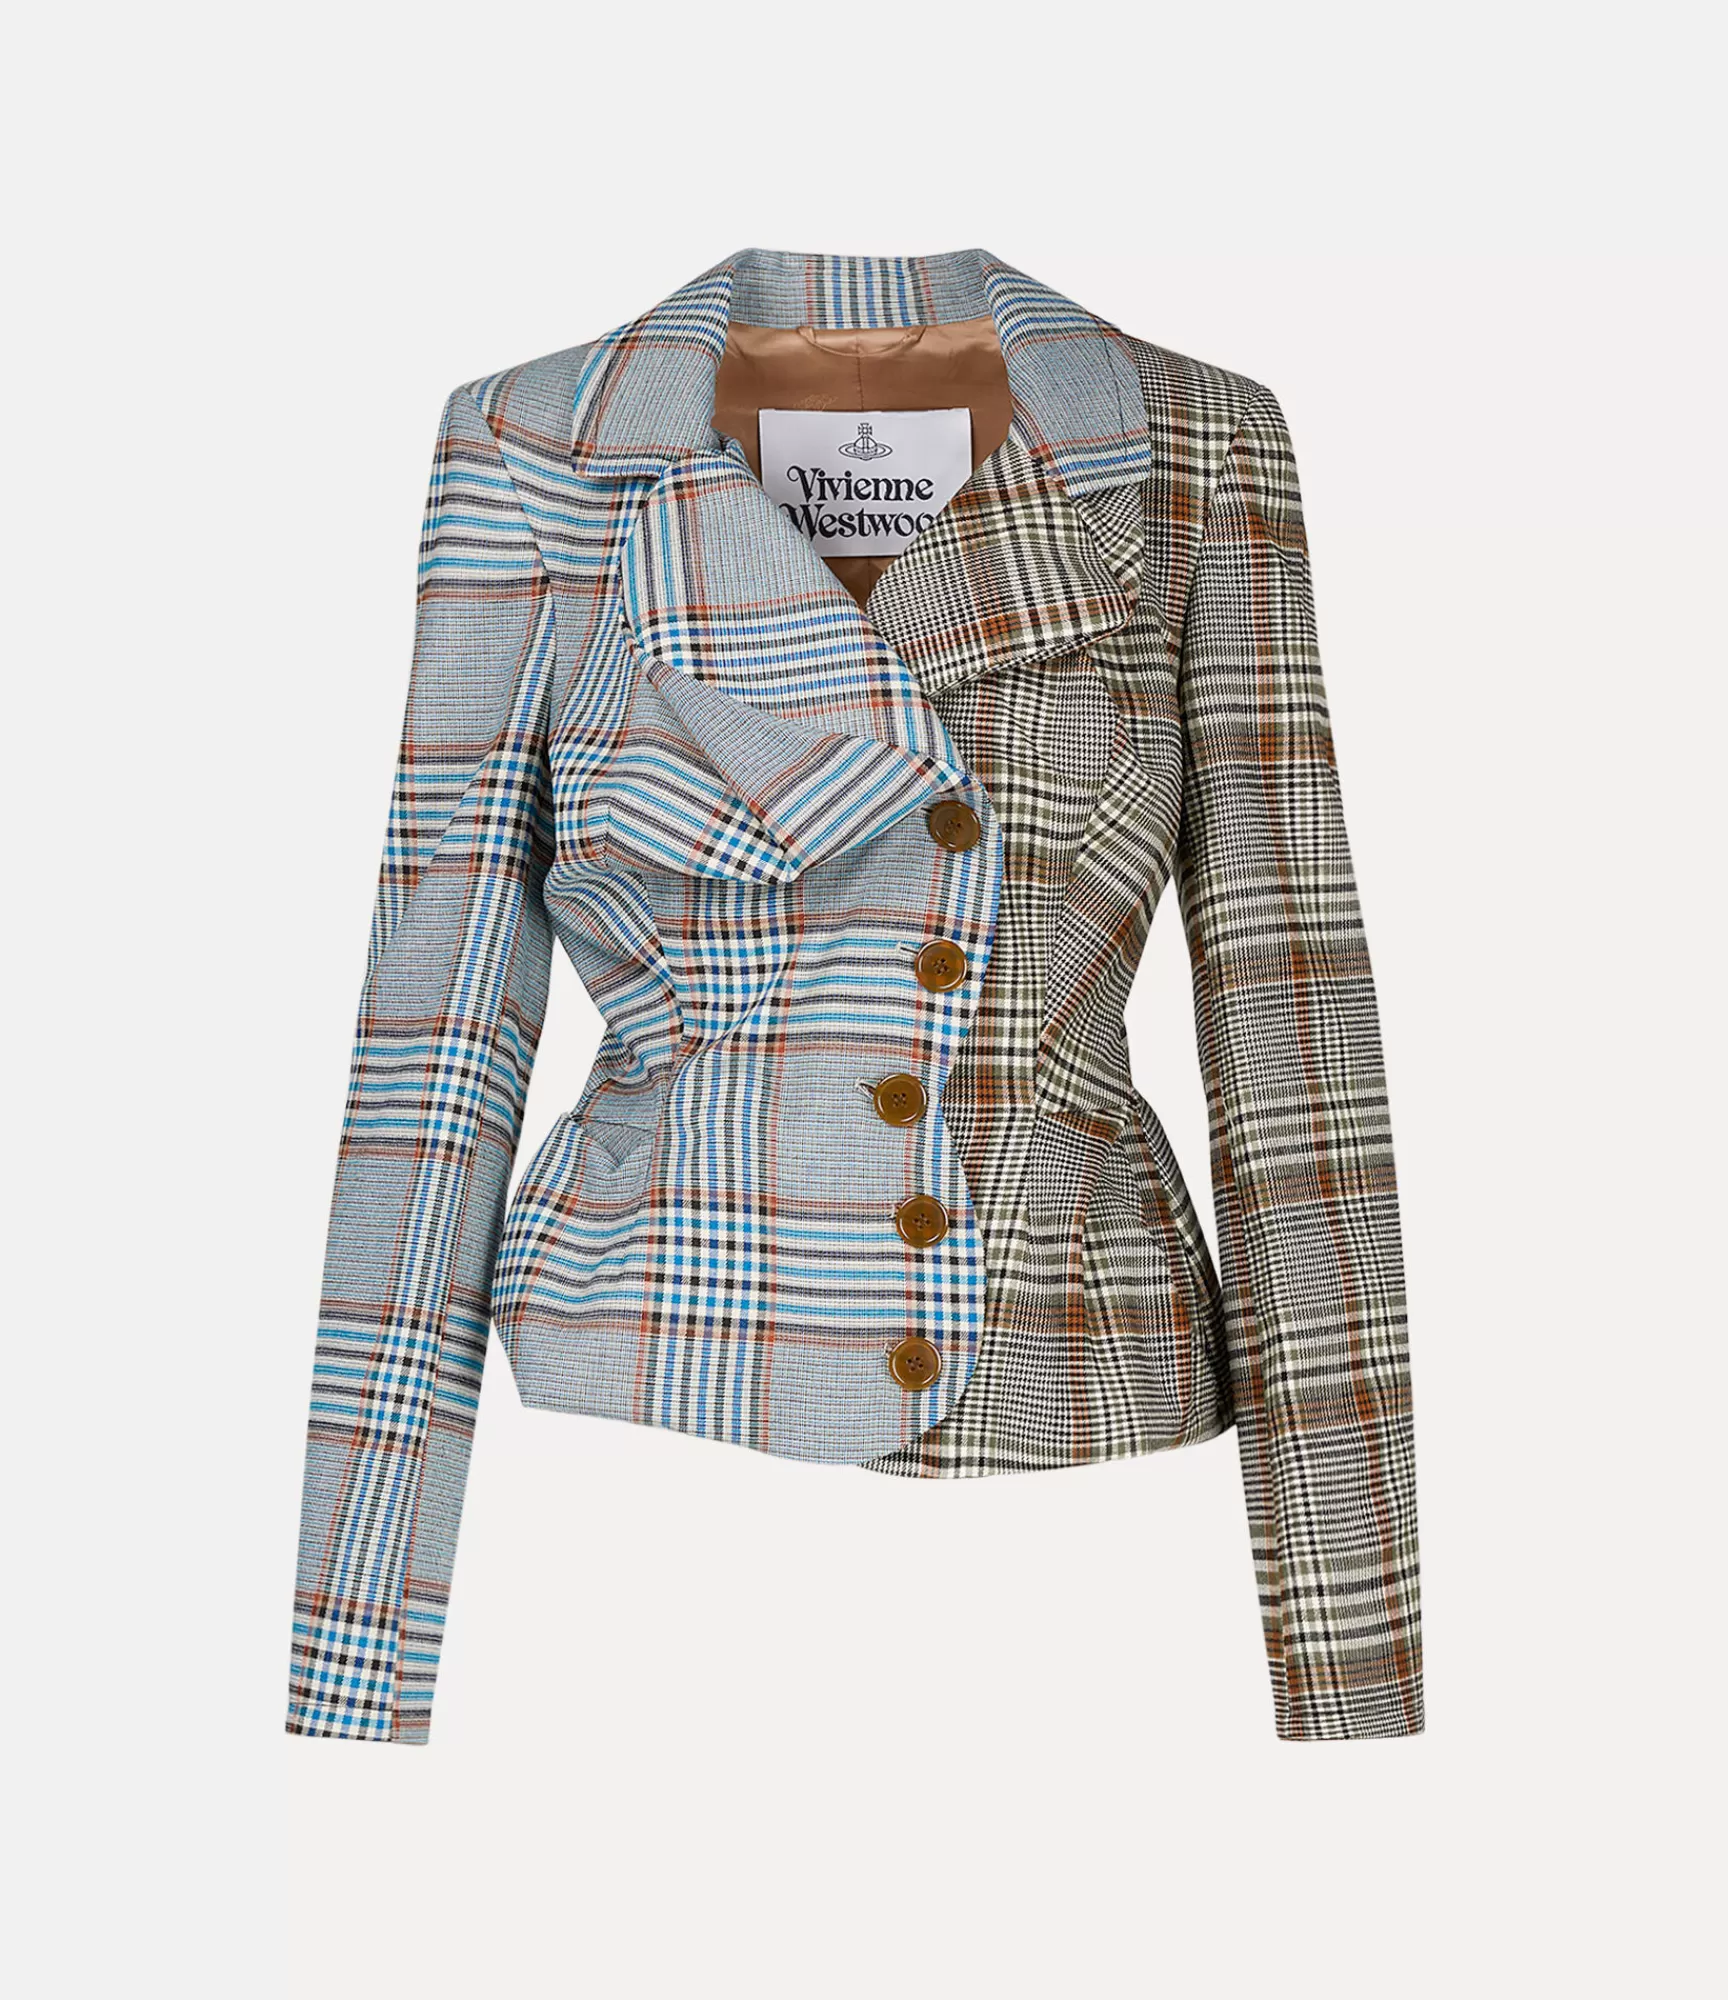 Vivienne Westwood Coats and Jackets*Drunken tailored jacket Mix